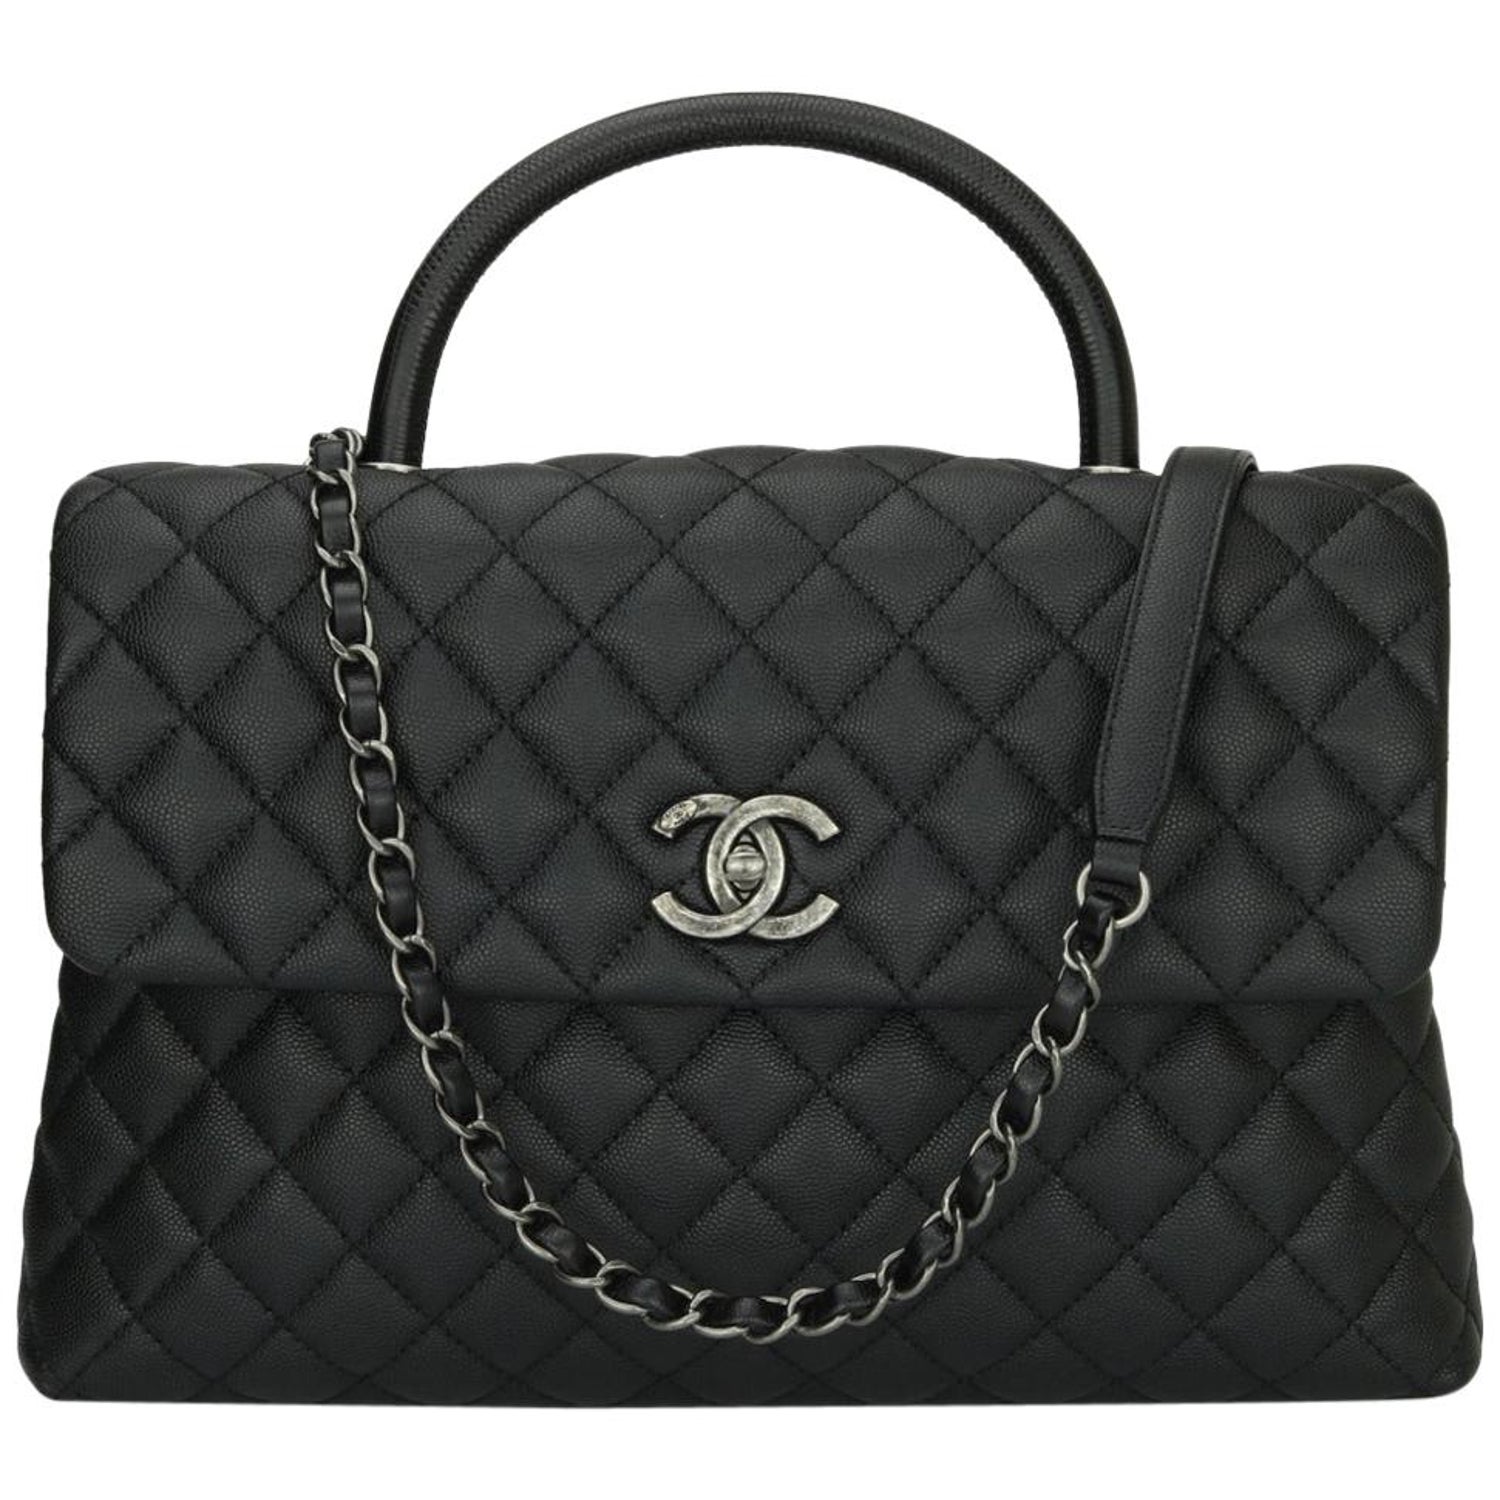 Chanel So Black Coco Handle Bag - For Sale on 1stDibs  coco handle so black,  chanel coco handle so black bag